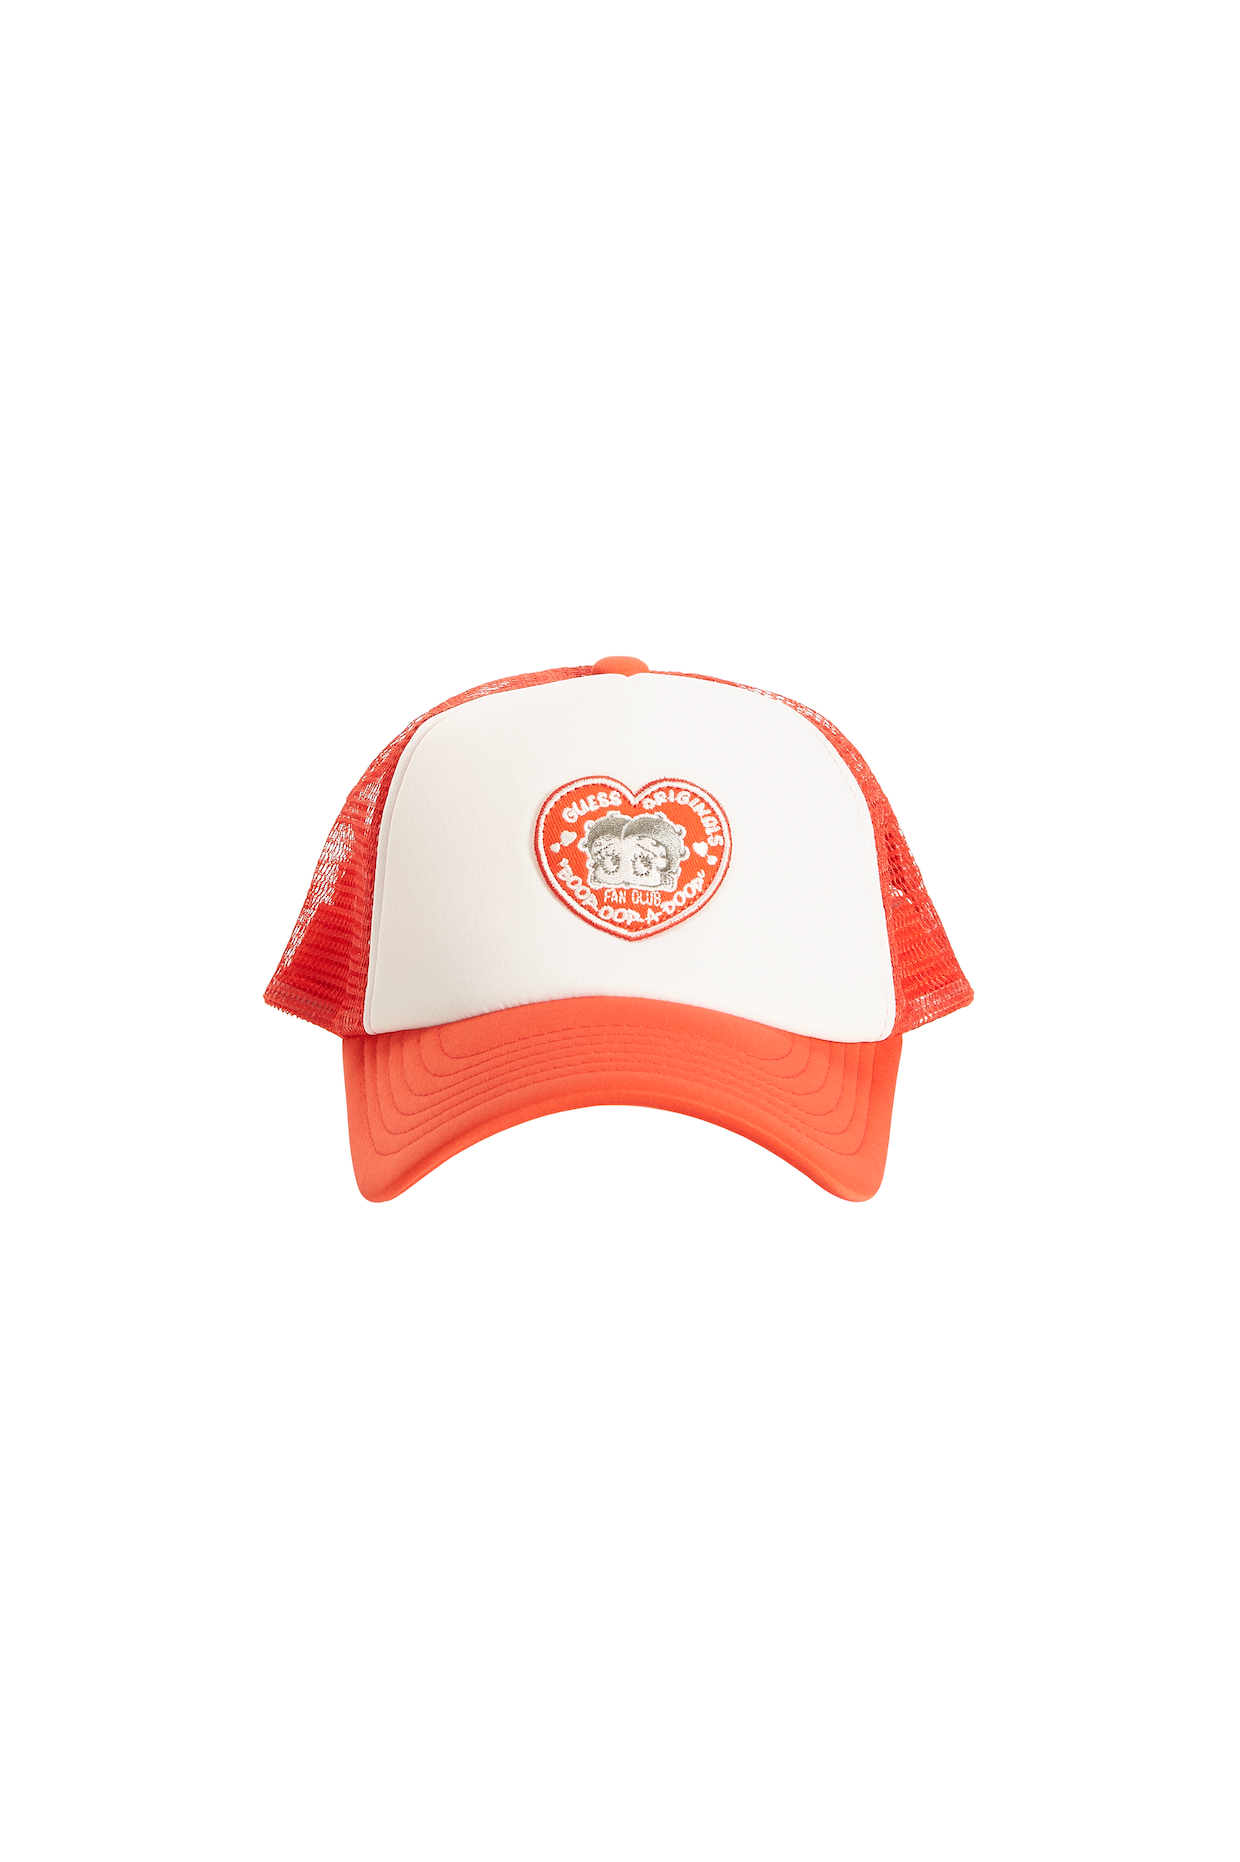 Trucker hat with Betty Boop logo